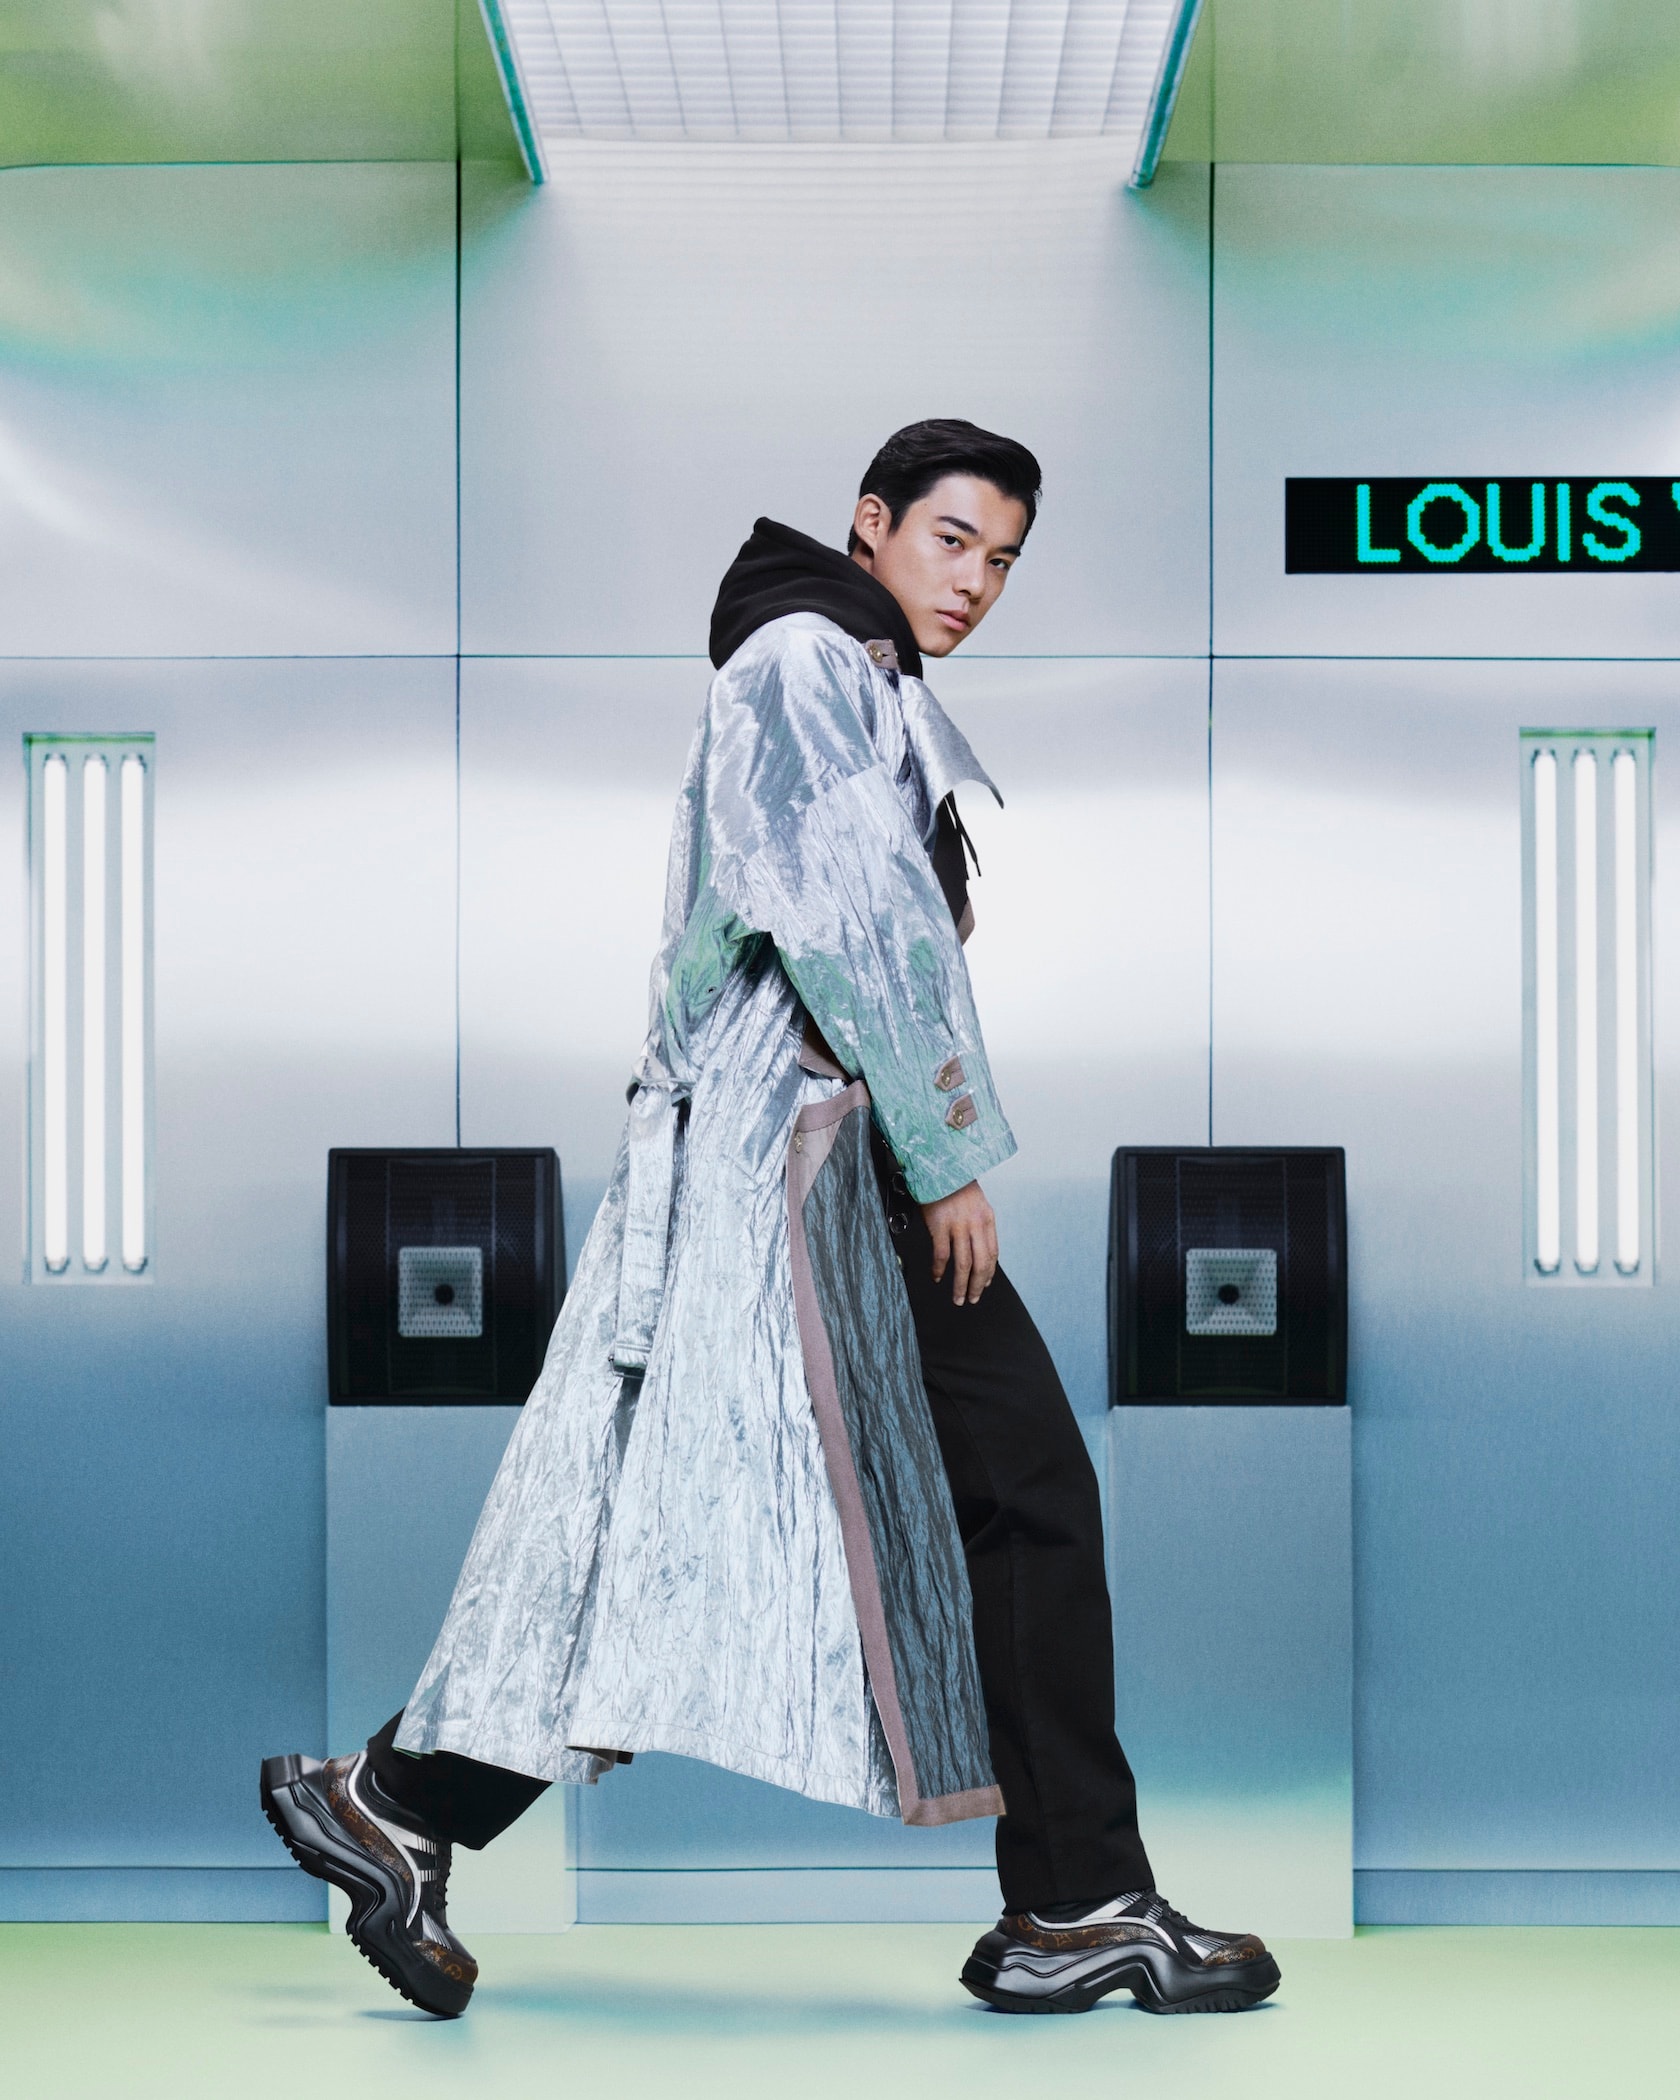 Louis Vuitton 推出全新 LV Archlight 運動鞋系列